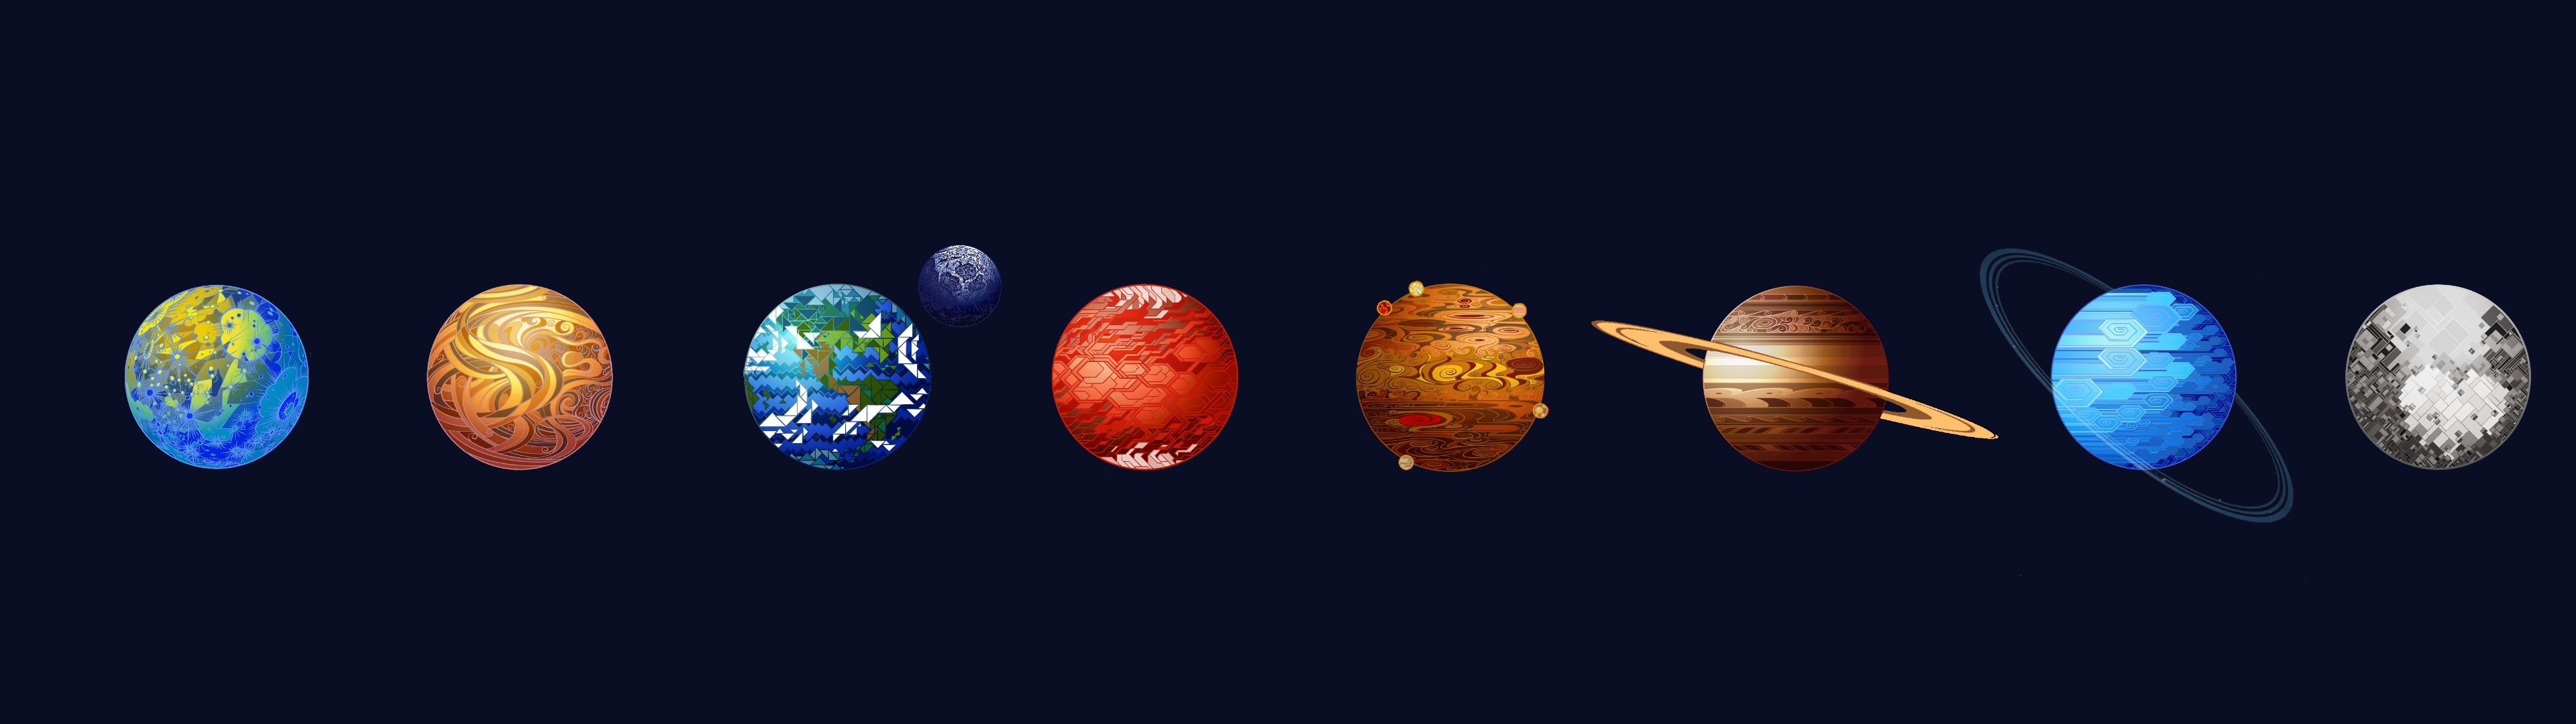 Artwork Planet Digital Art Minimalism Earth Moon Solar System Venus Jupiter Super Ultrawide Saturn N 3840x1080